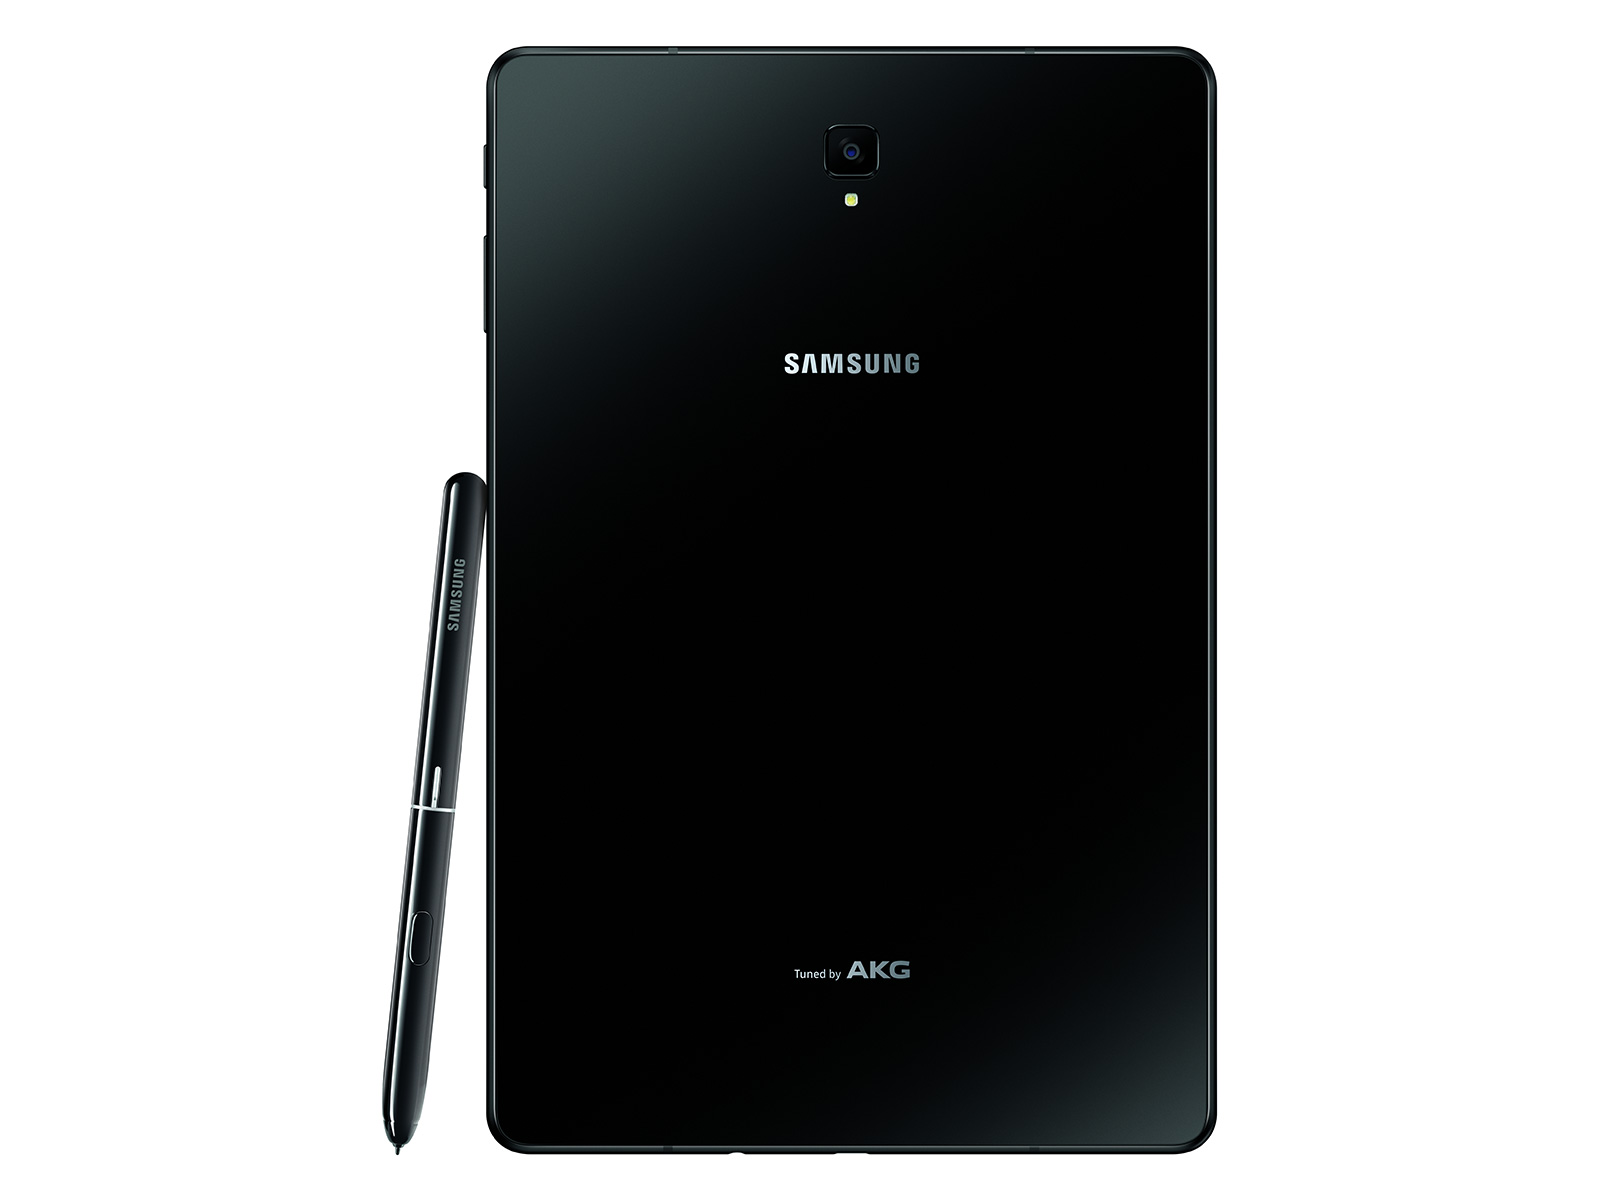 Galaxy Tab S4 10.5” (S Pen included), 64GB, Black, Wi-Fi Tablets